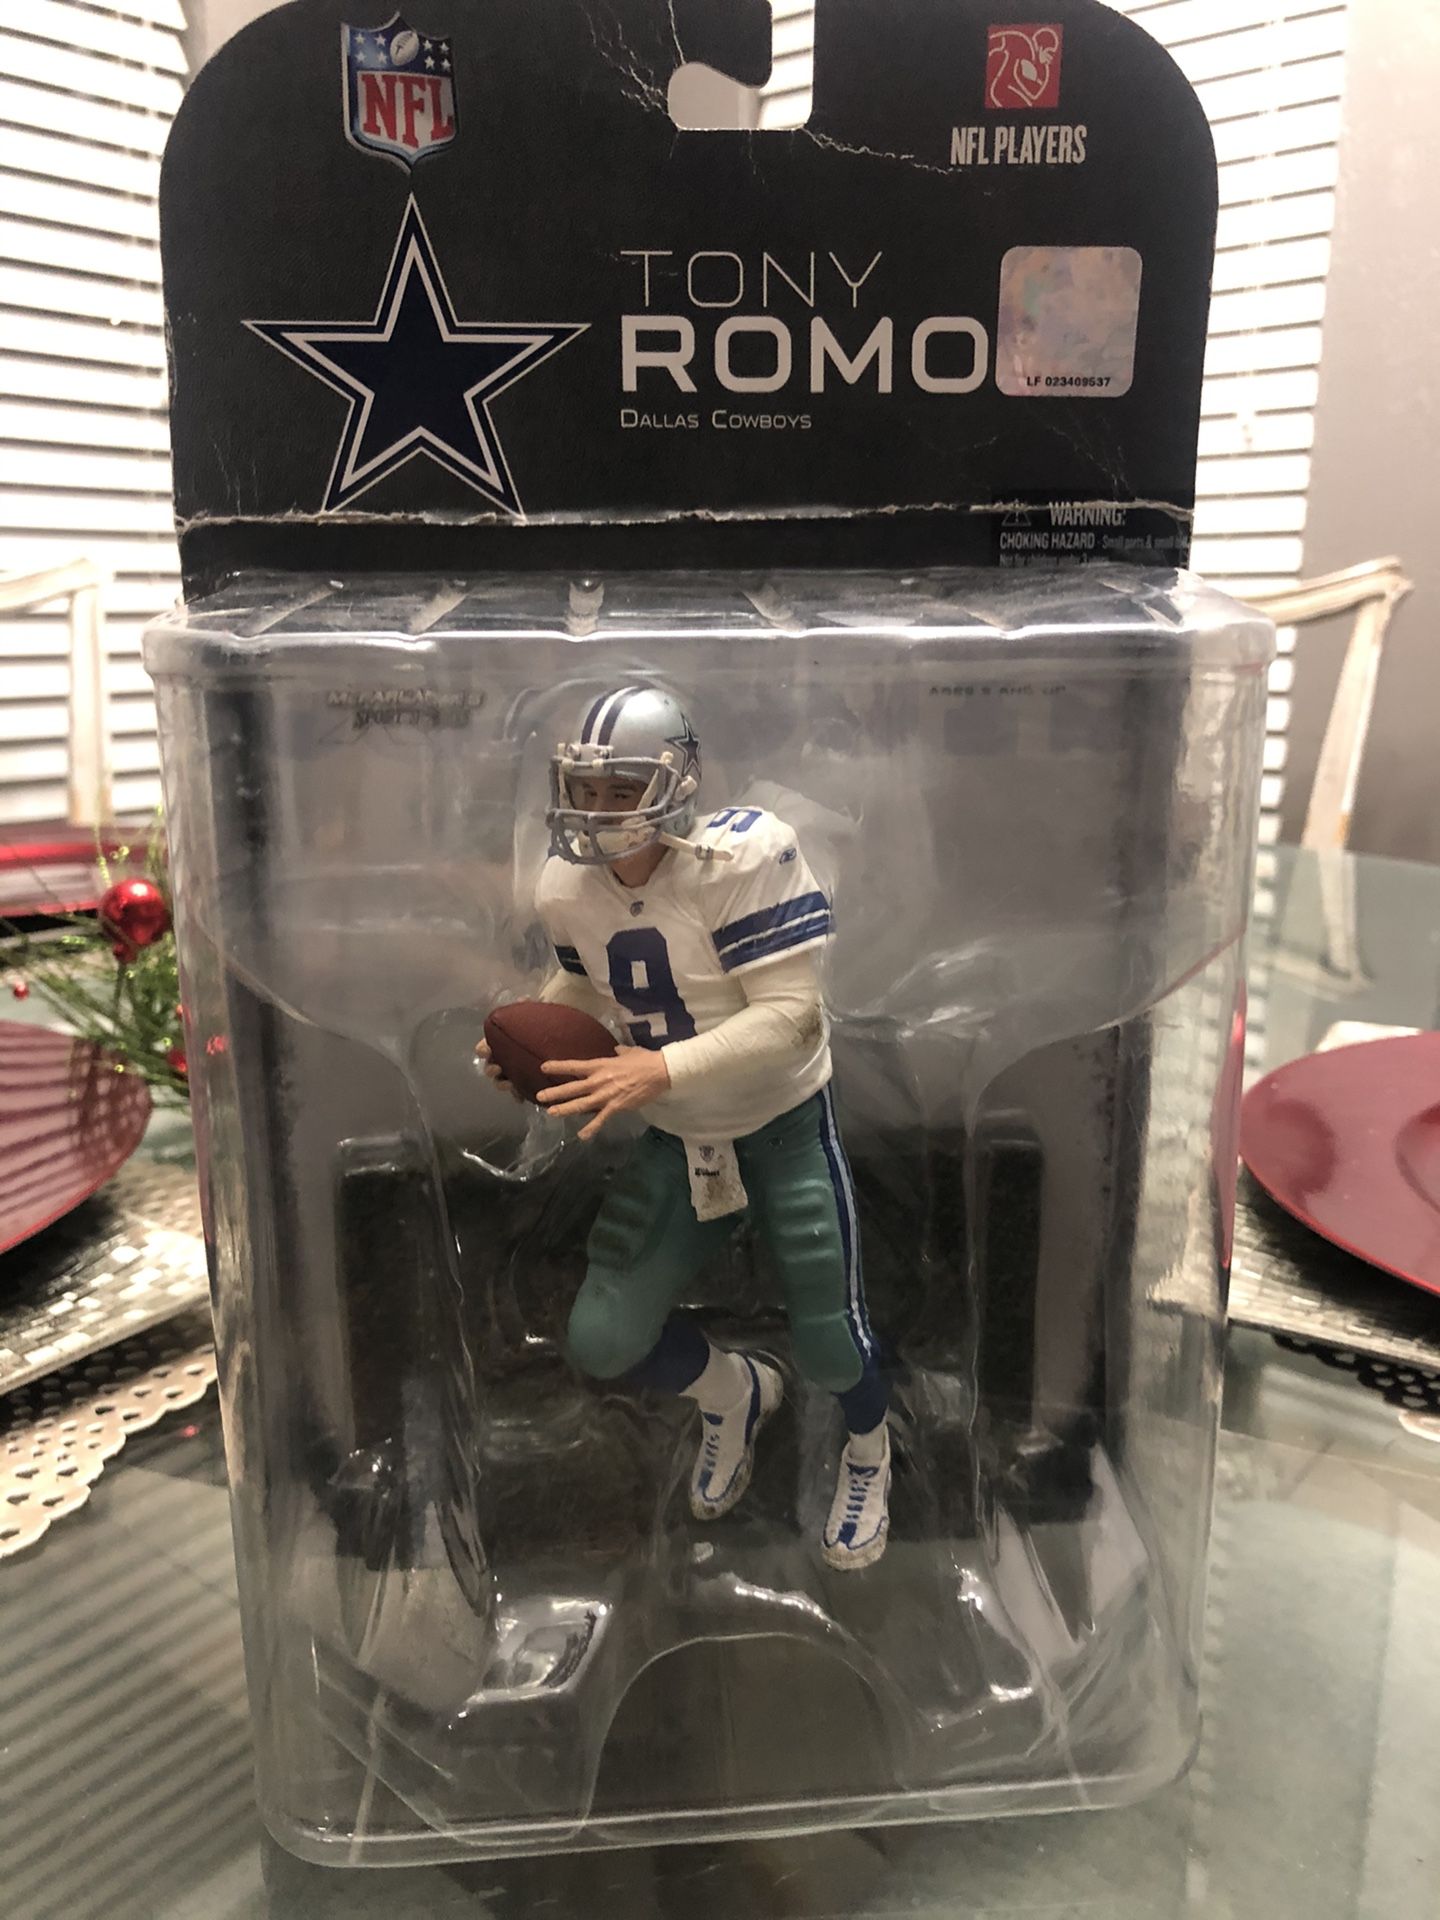 Tony Romo action figure